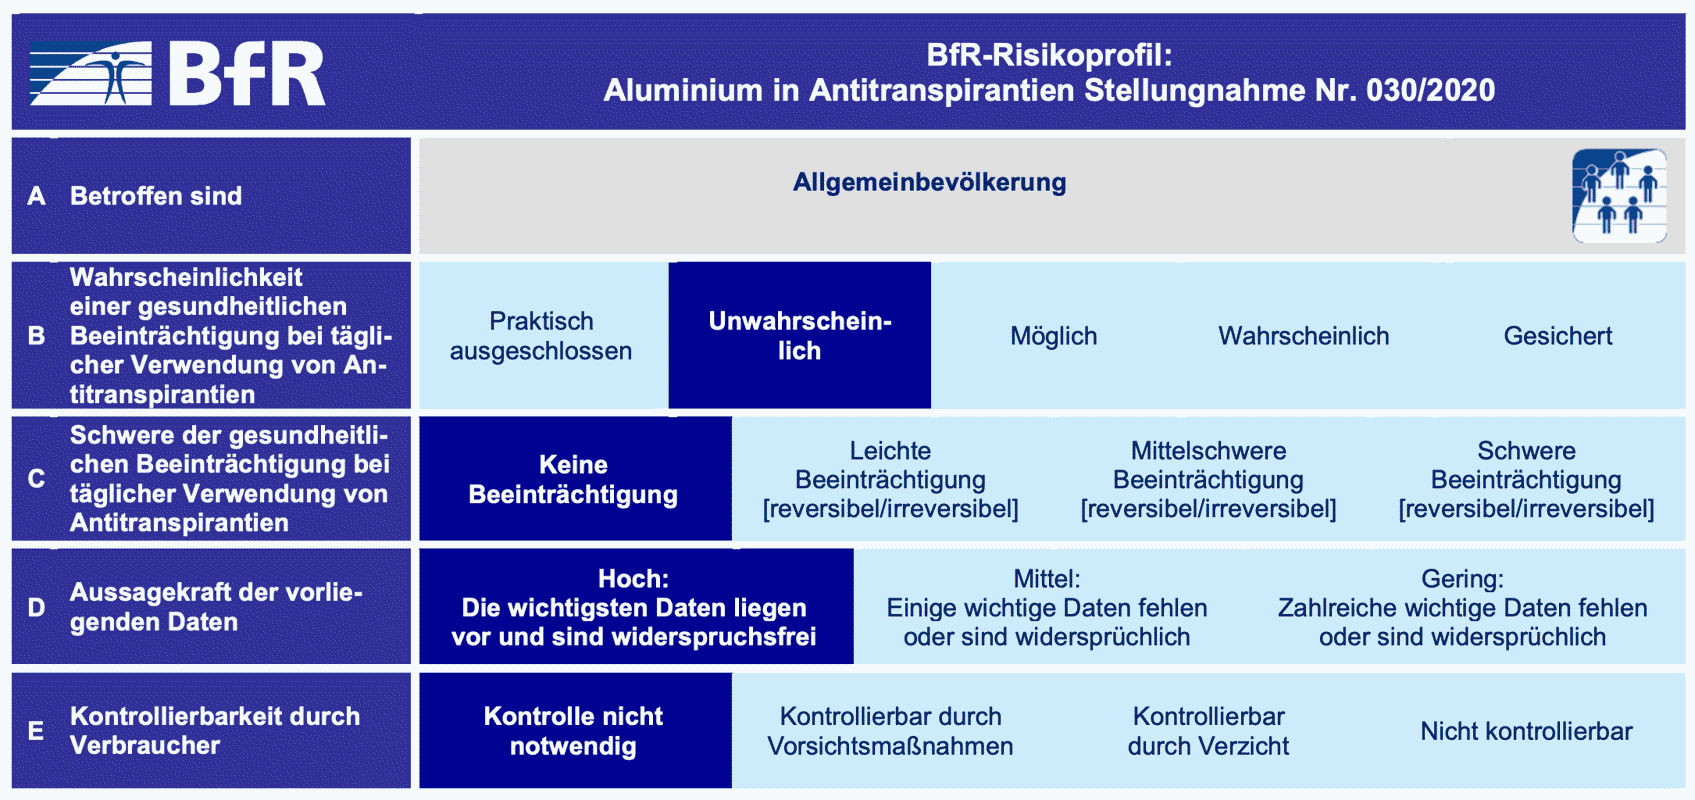 226210_2_2020-07-20 BfR - Gesamtbewertung - Aluminiumhaltige Antitranspirantien.png